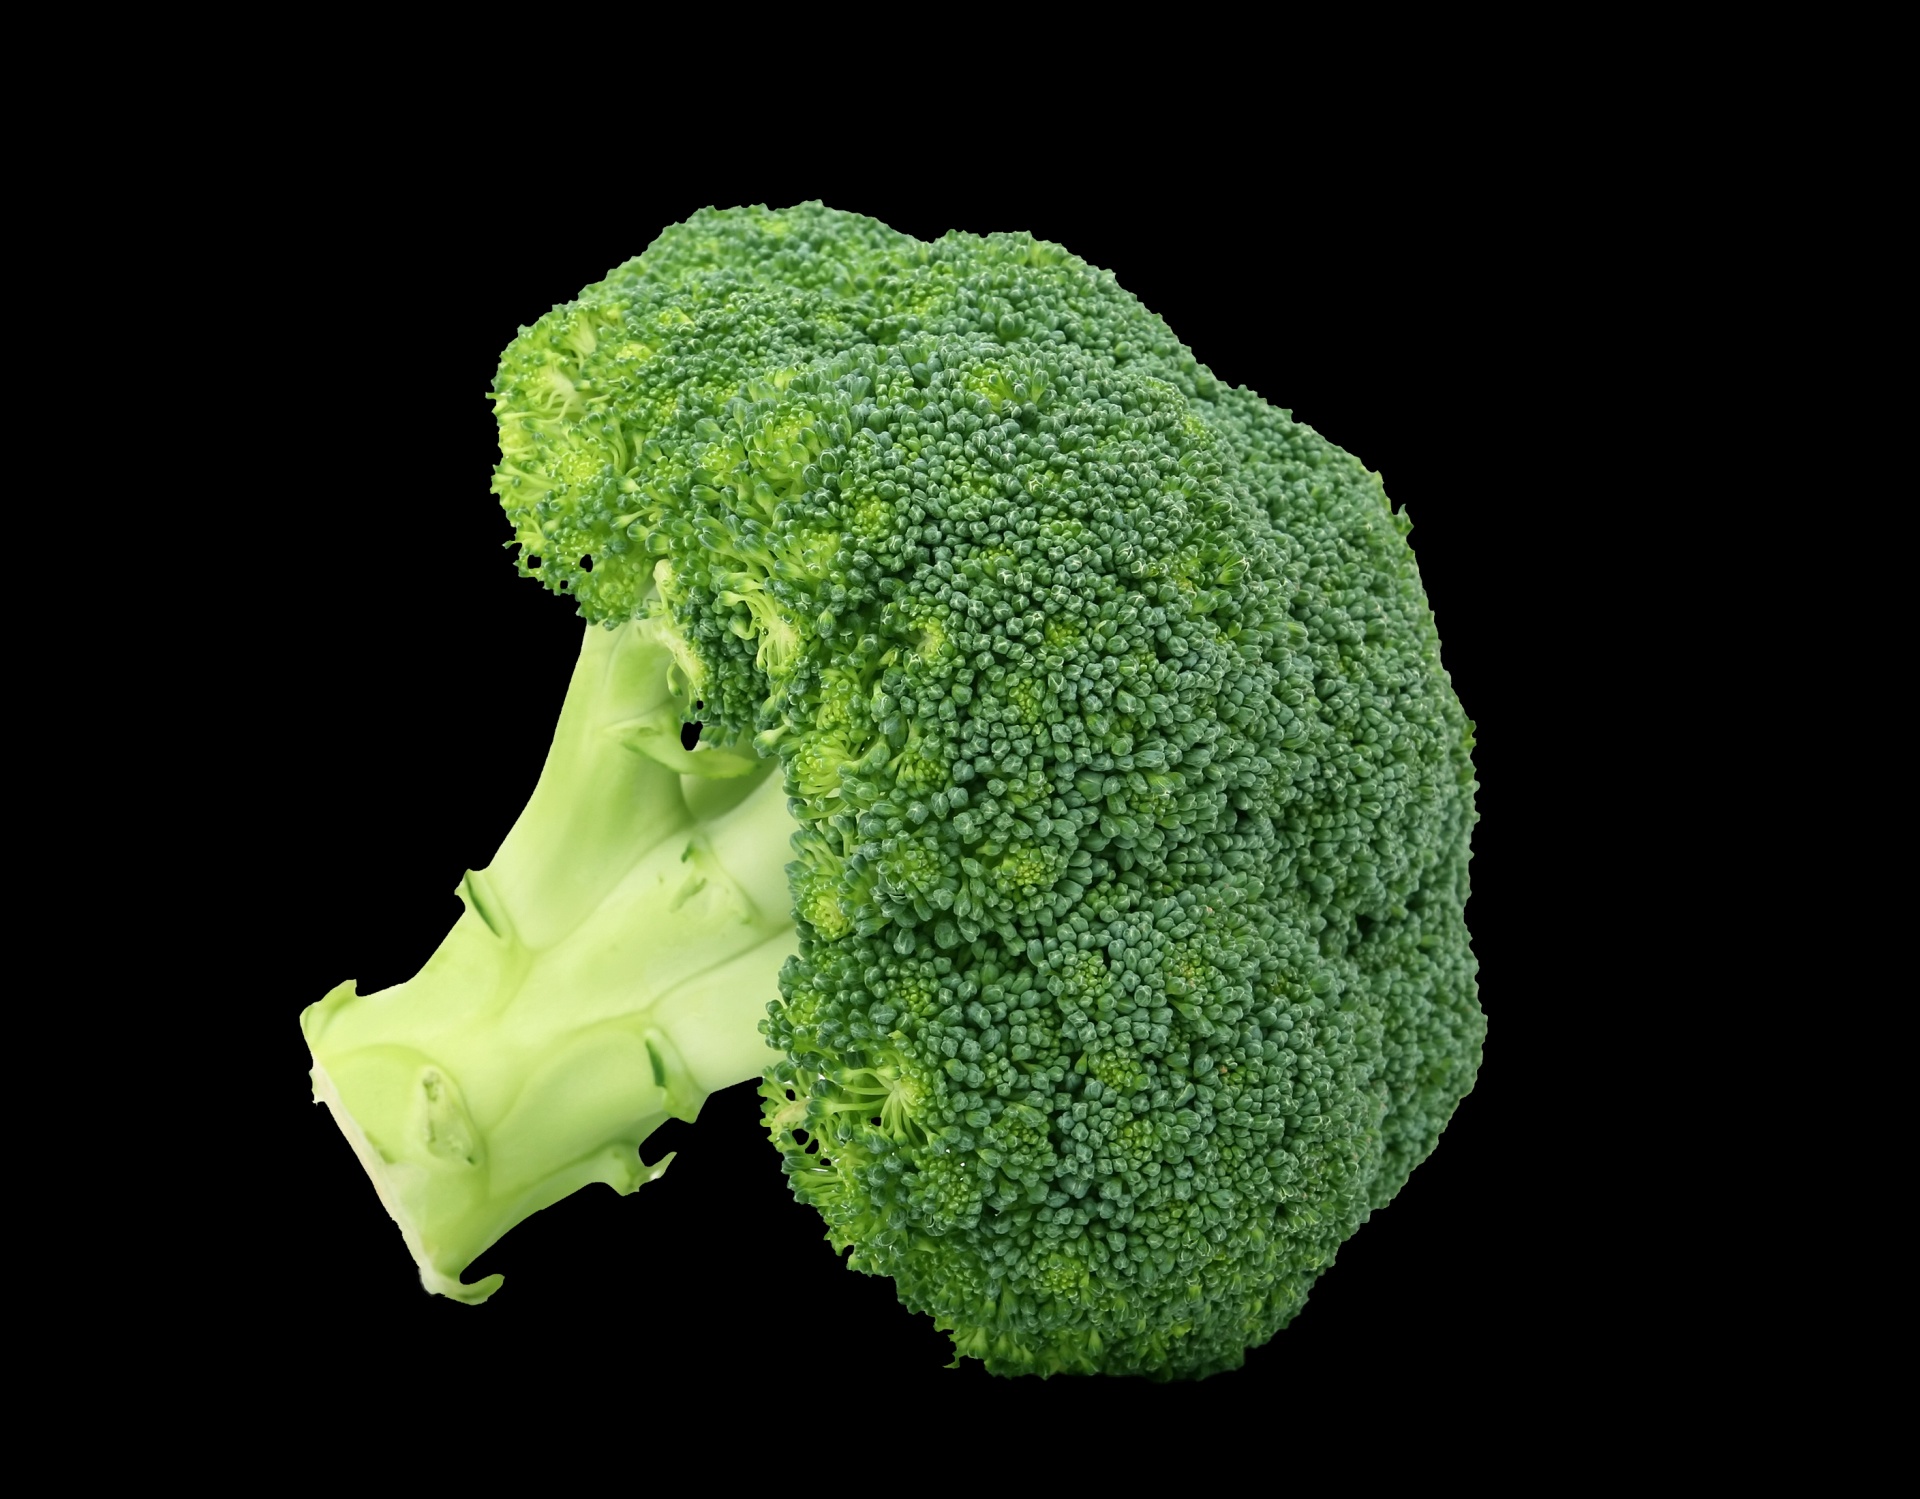 Broccolli butts trap